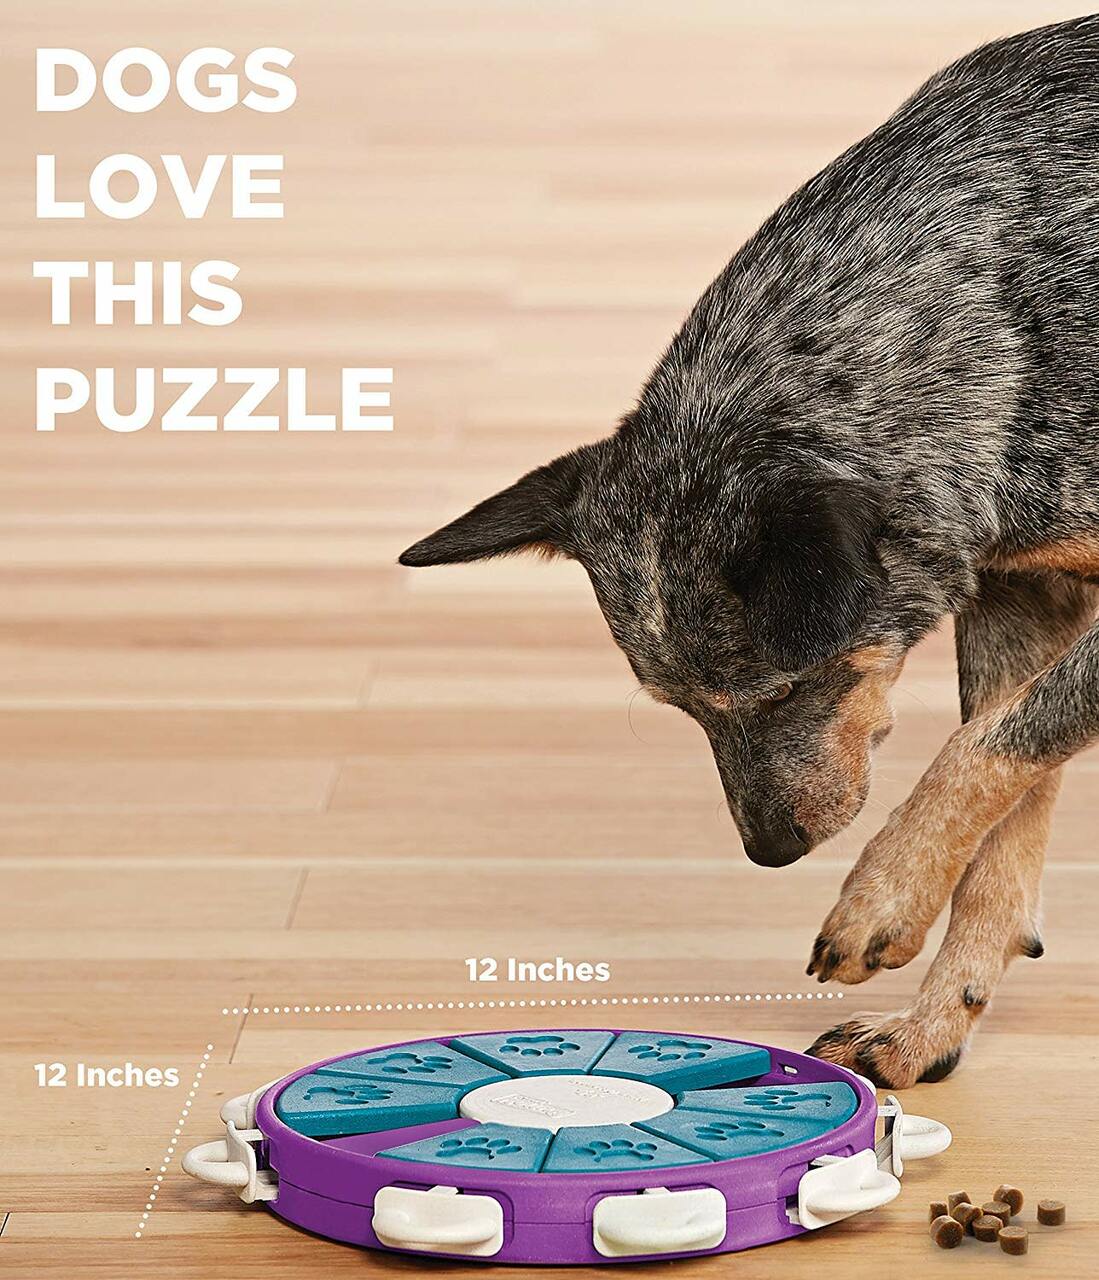 Outward Hound Nina Ottosson Twister Puzzle Dog Toy